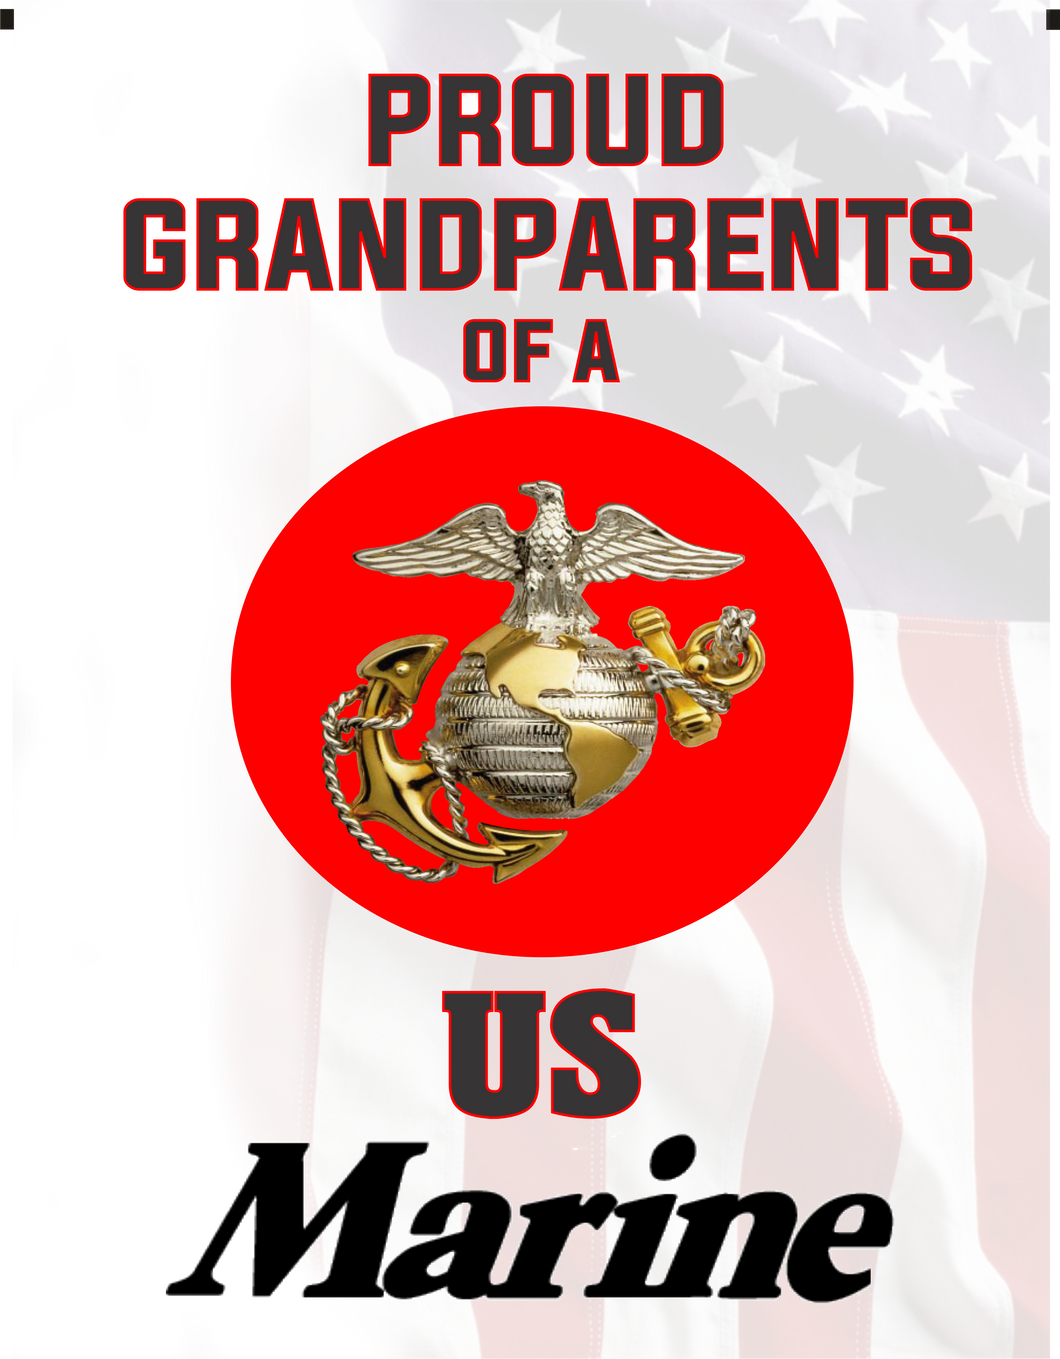 Proud Grandparents of U.S. Marine Garden Flag